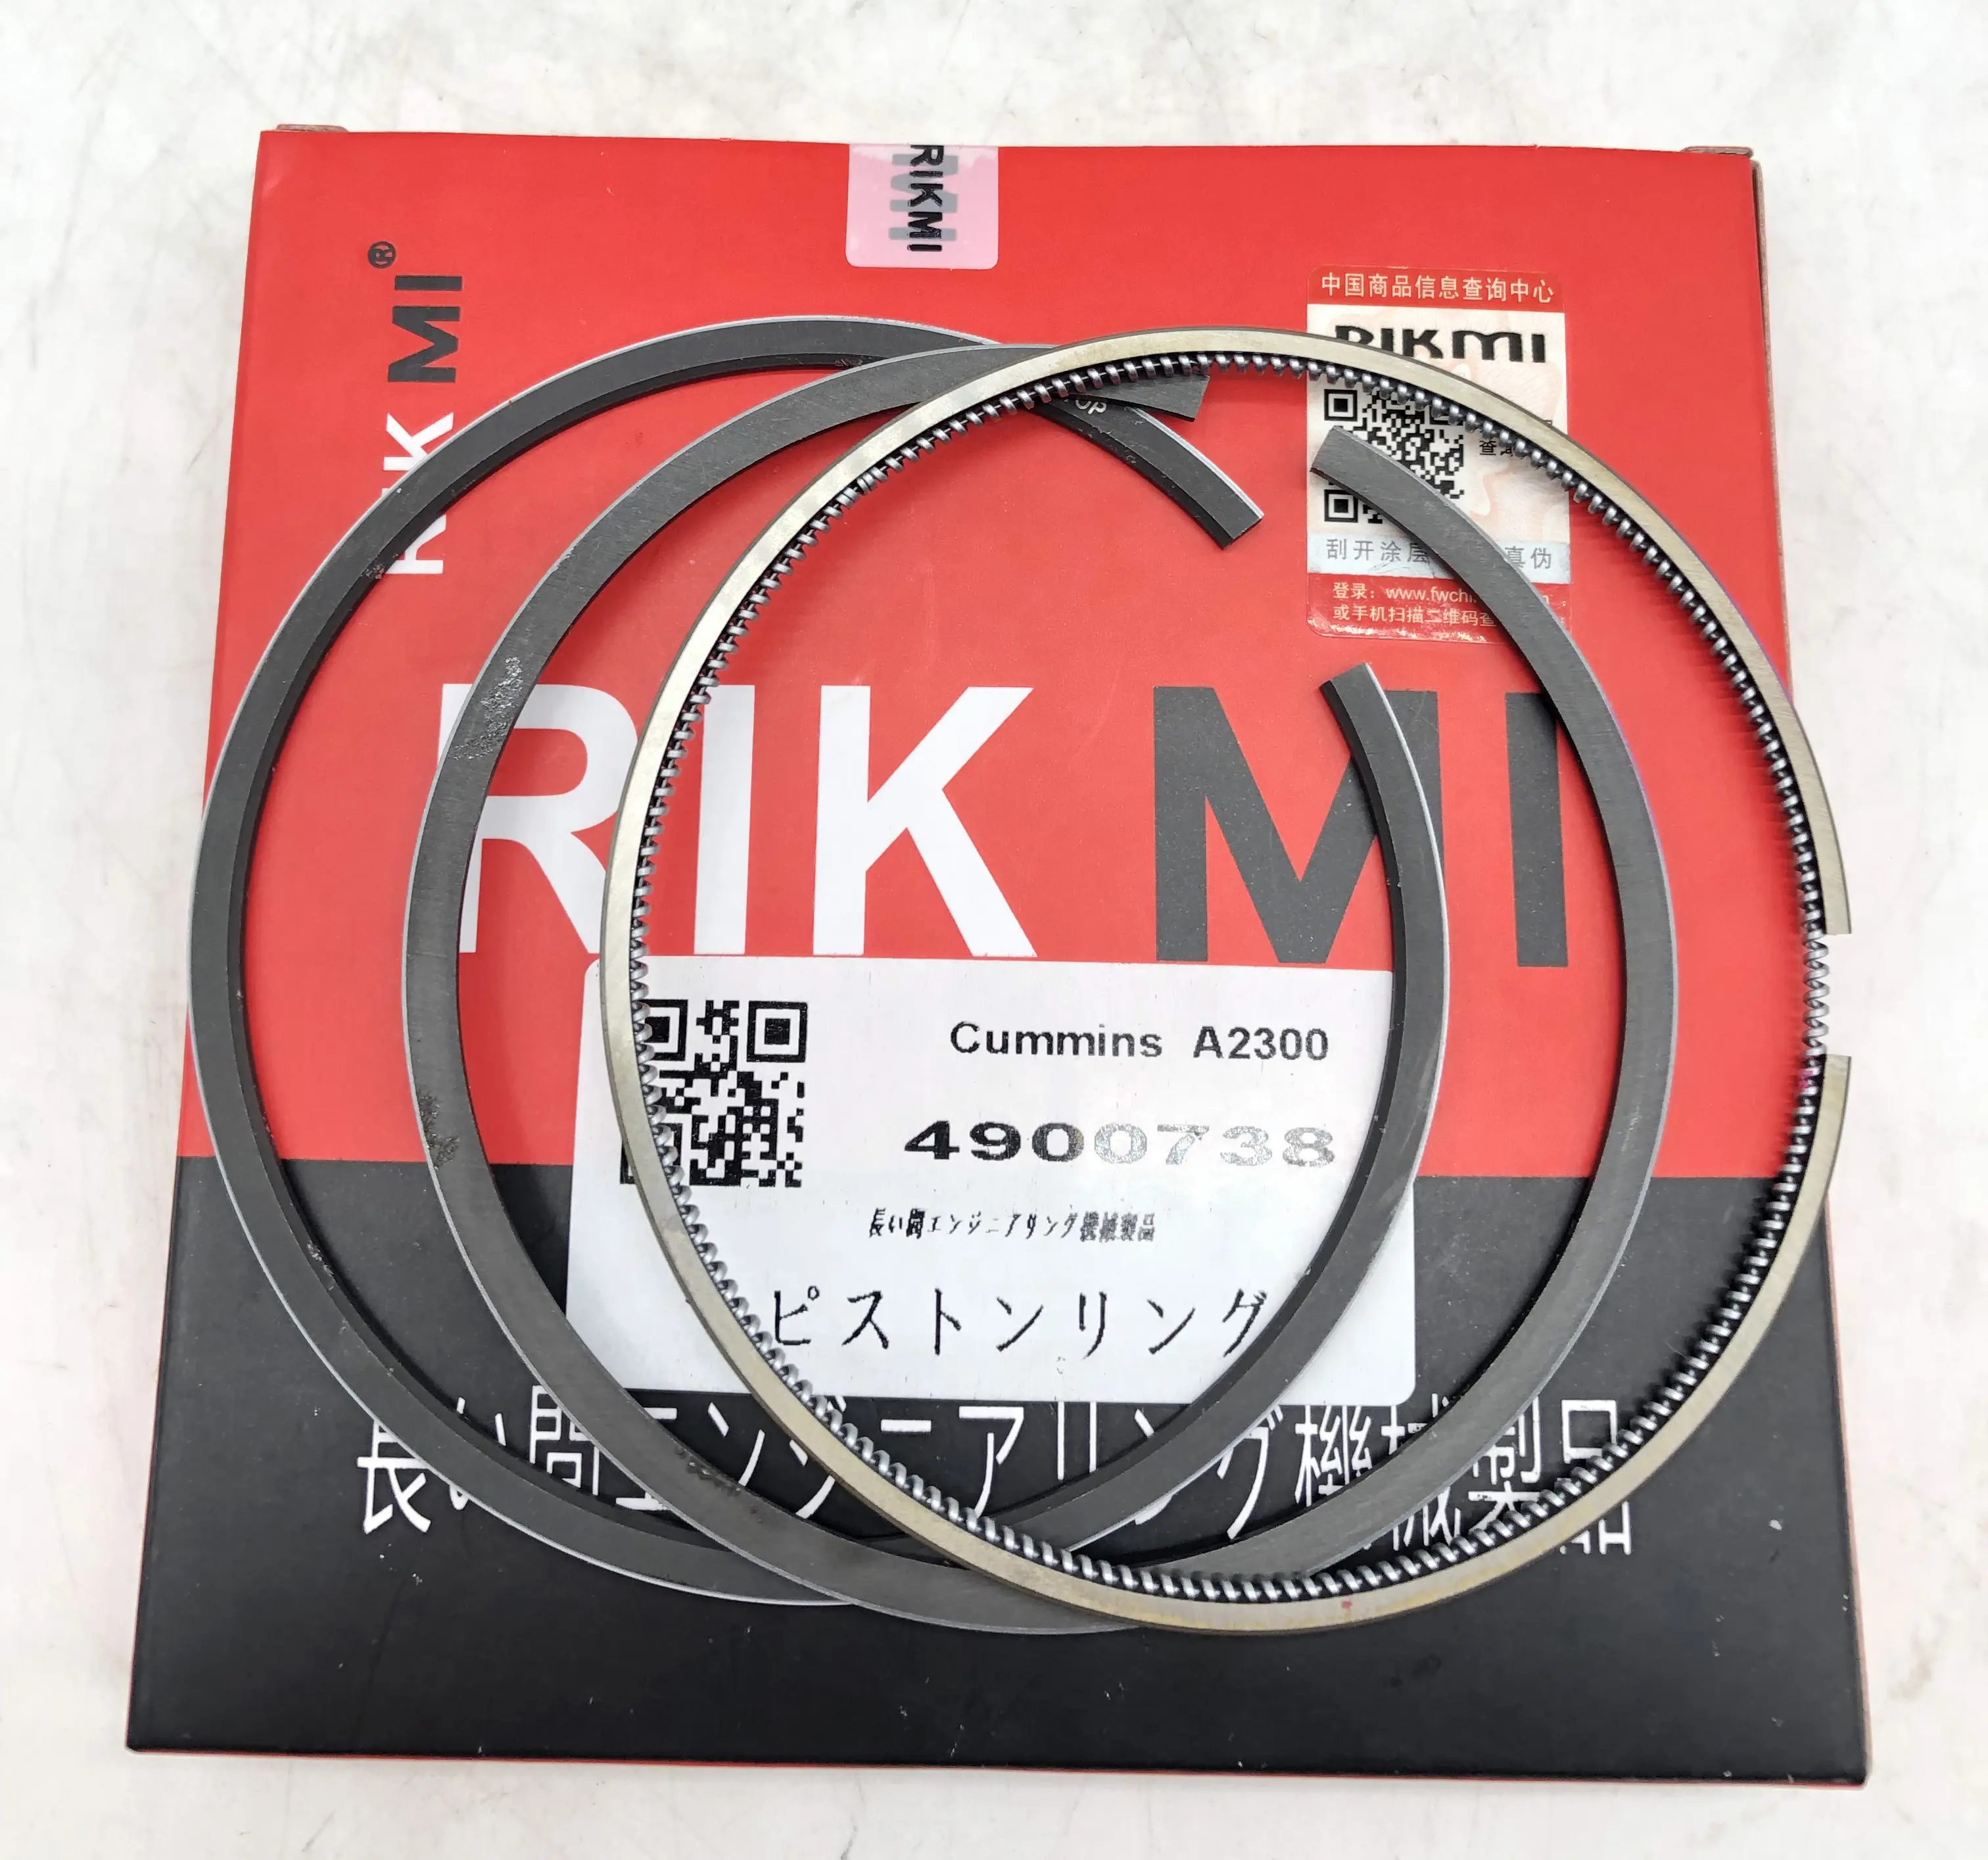 Rikmi high quality piston ring for Cummins A2300 diesel engine 4900738 4900498